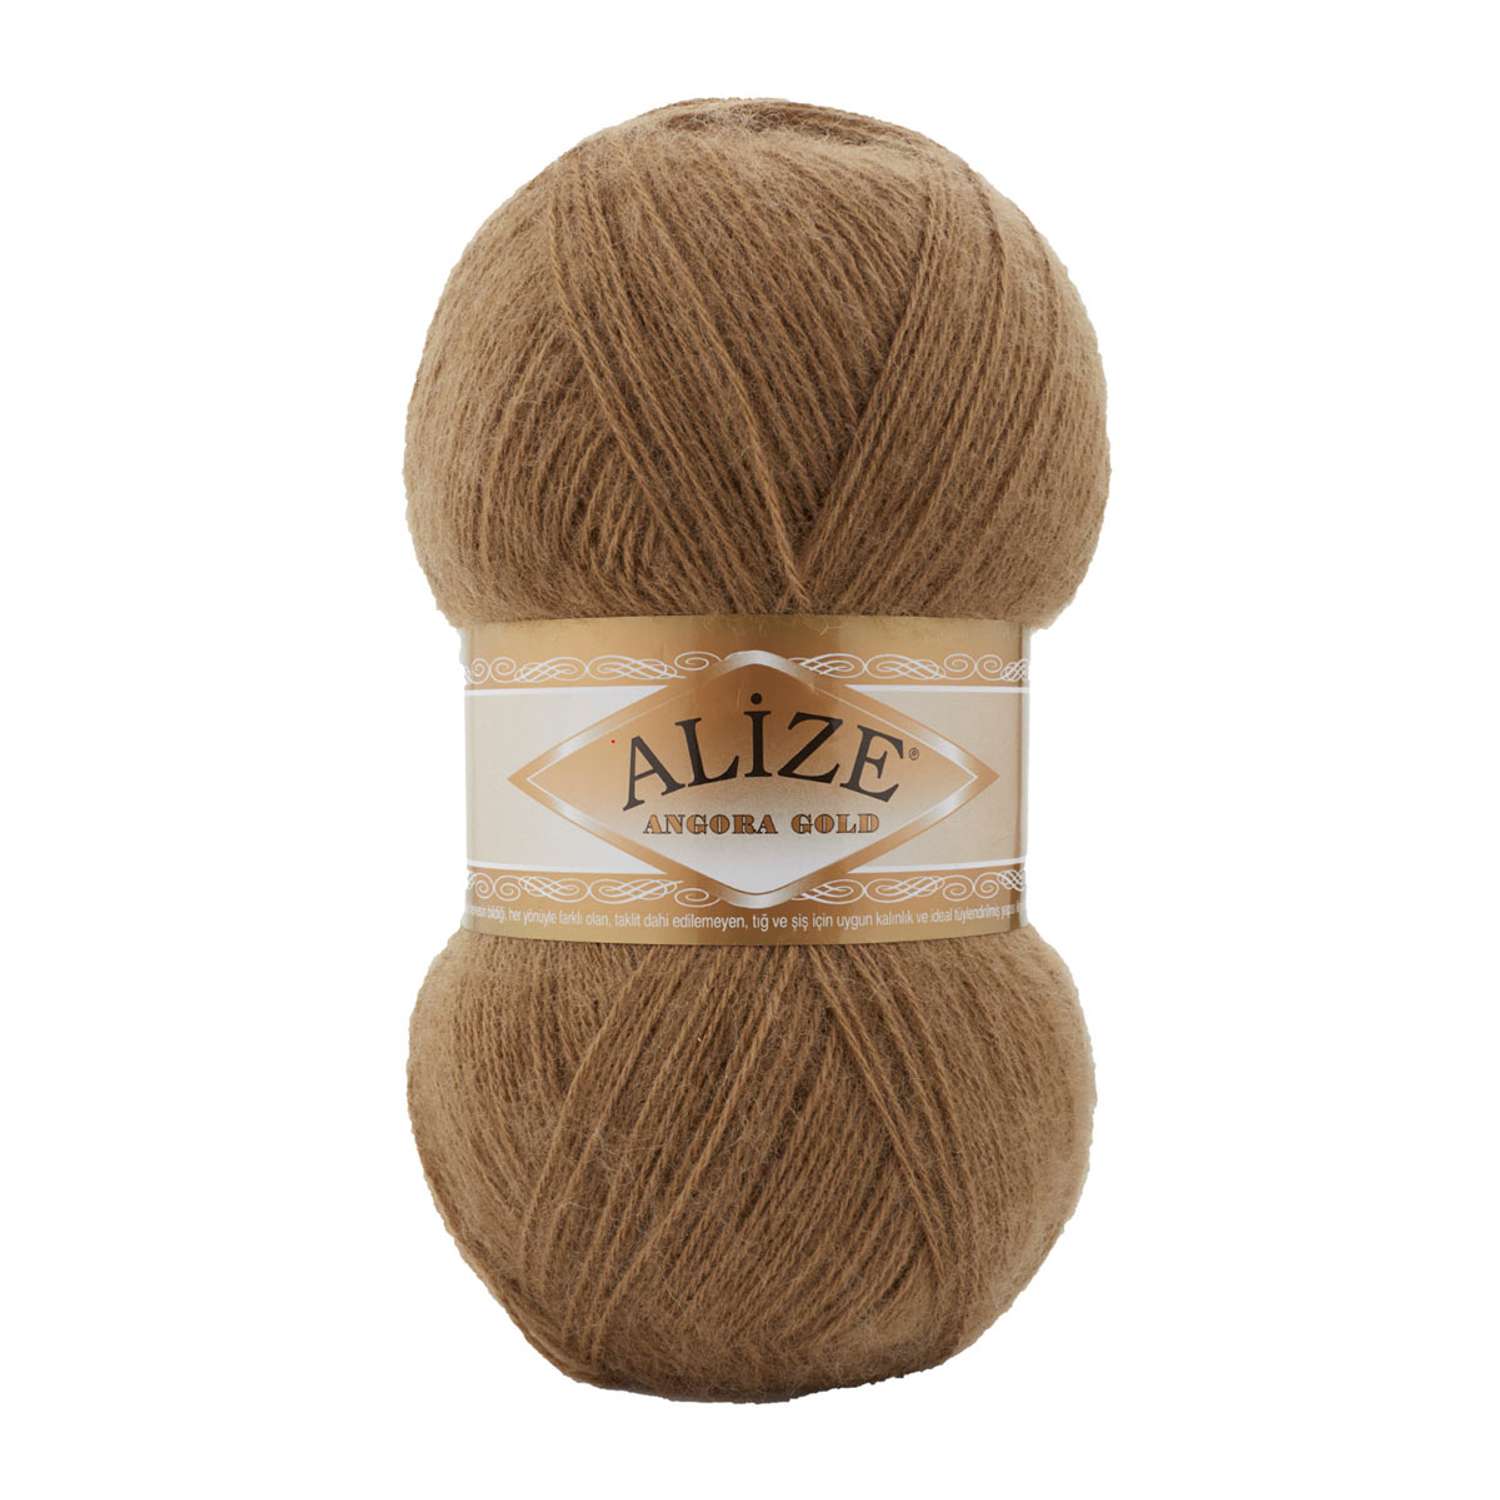 Пряжа Alize мягкая теплая для шарфов кардиганов Angora Gold 100 гр 550 м 5 мотков 466 тёмно-бежевый - фото 6